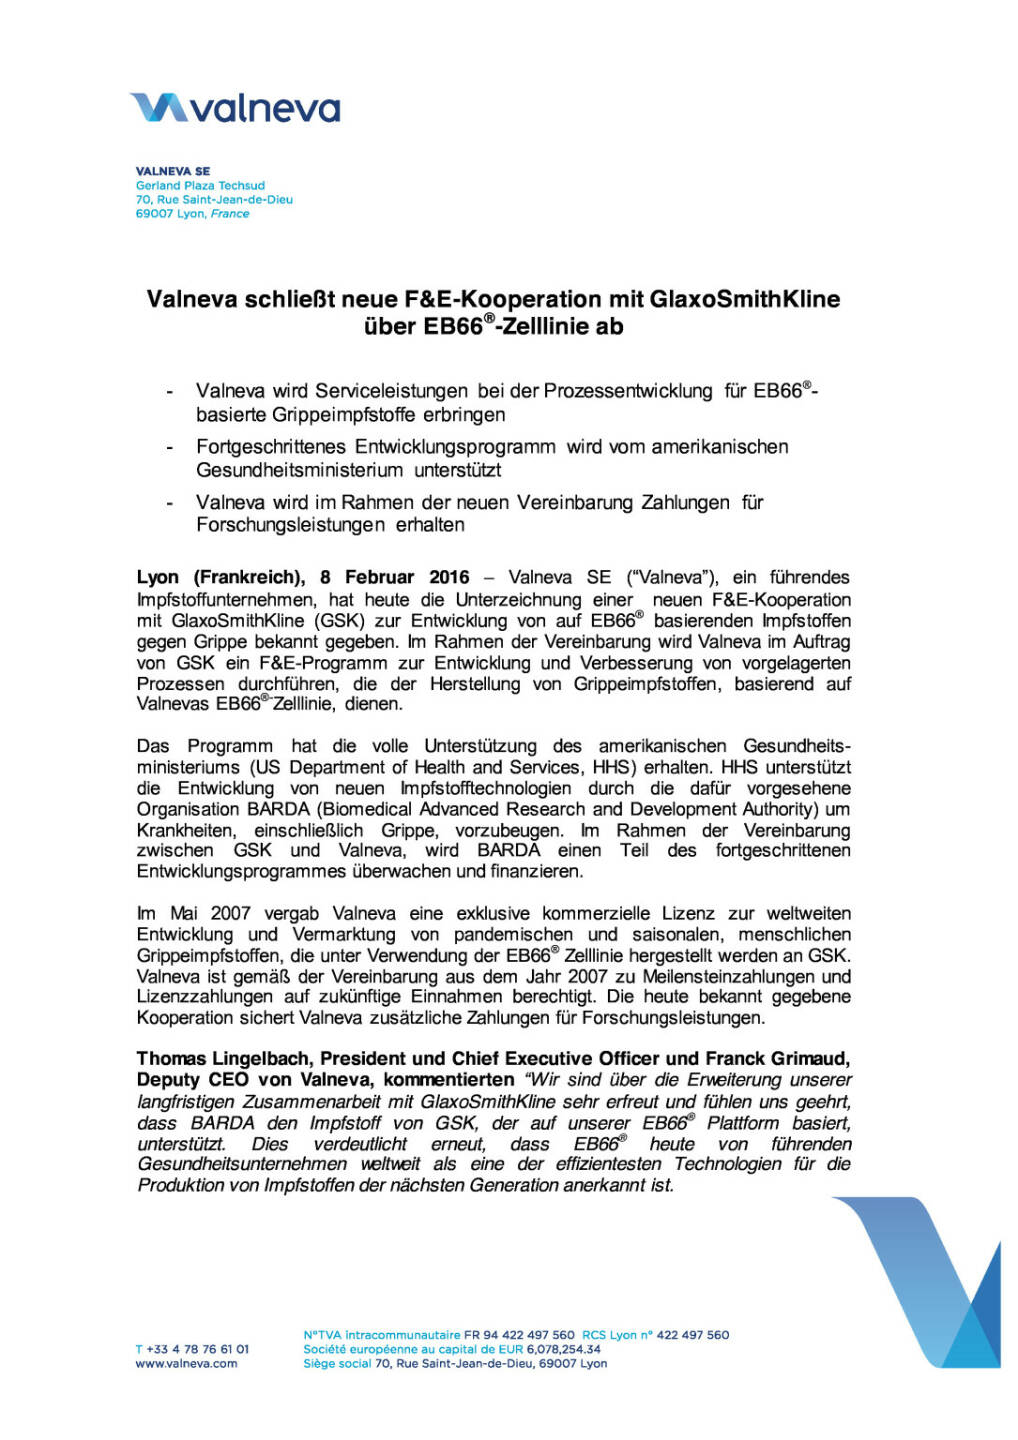 Valneva schließt neue F&E-Kooperation ab, Seite 1/3, komplettes Dokument unter http://boerse-social.com/static/uploads/file_608_valneva_schliesst_neue_fe-kooperation_ab.pdf